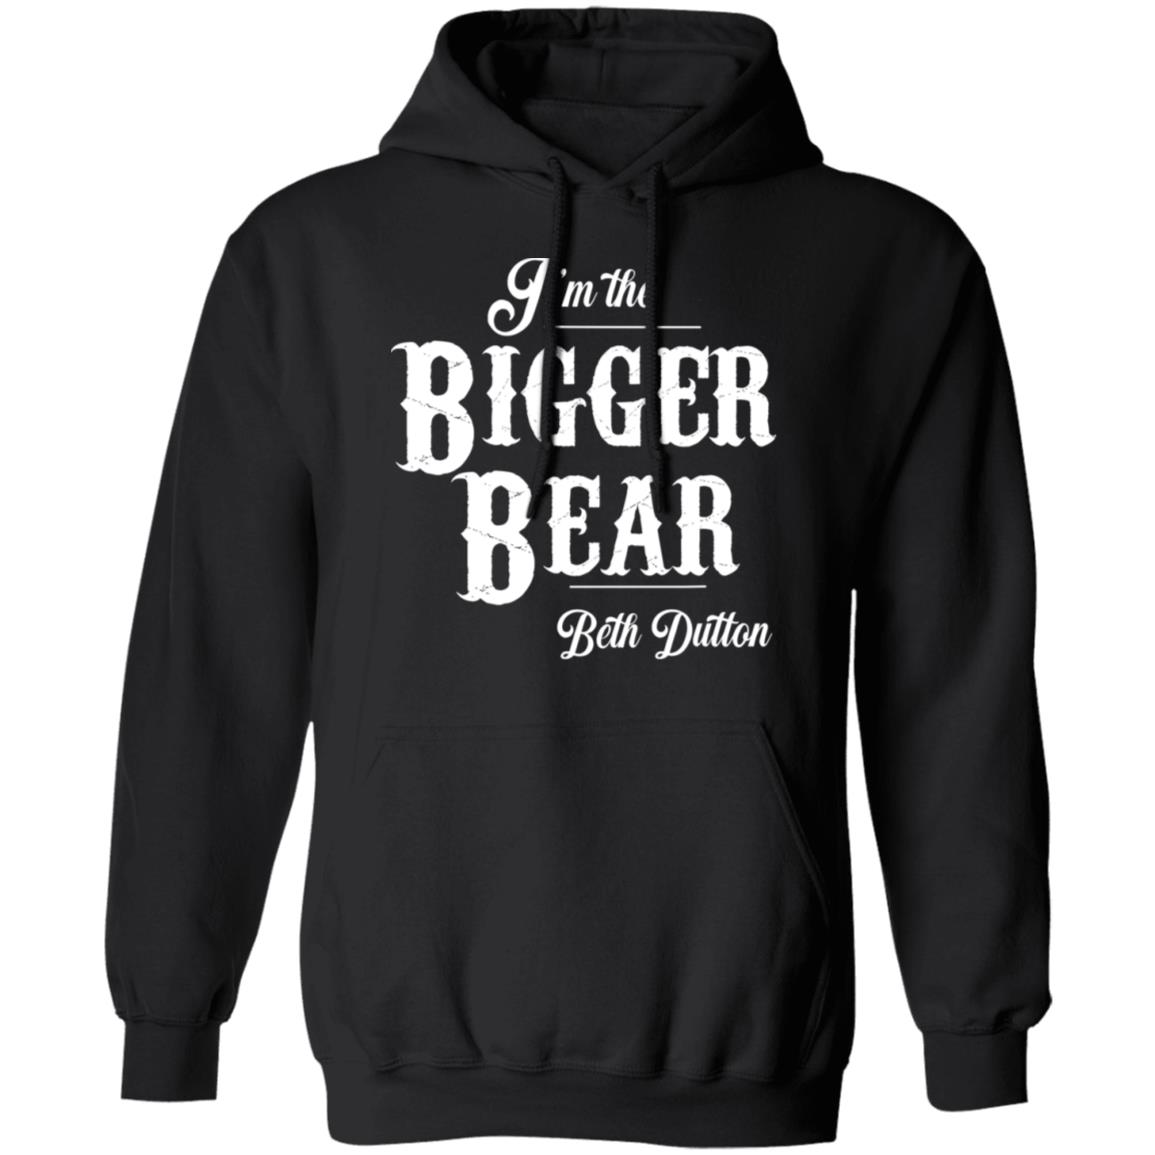 I’m The Bigger Bear Beth Dutton Shirt 1